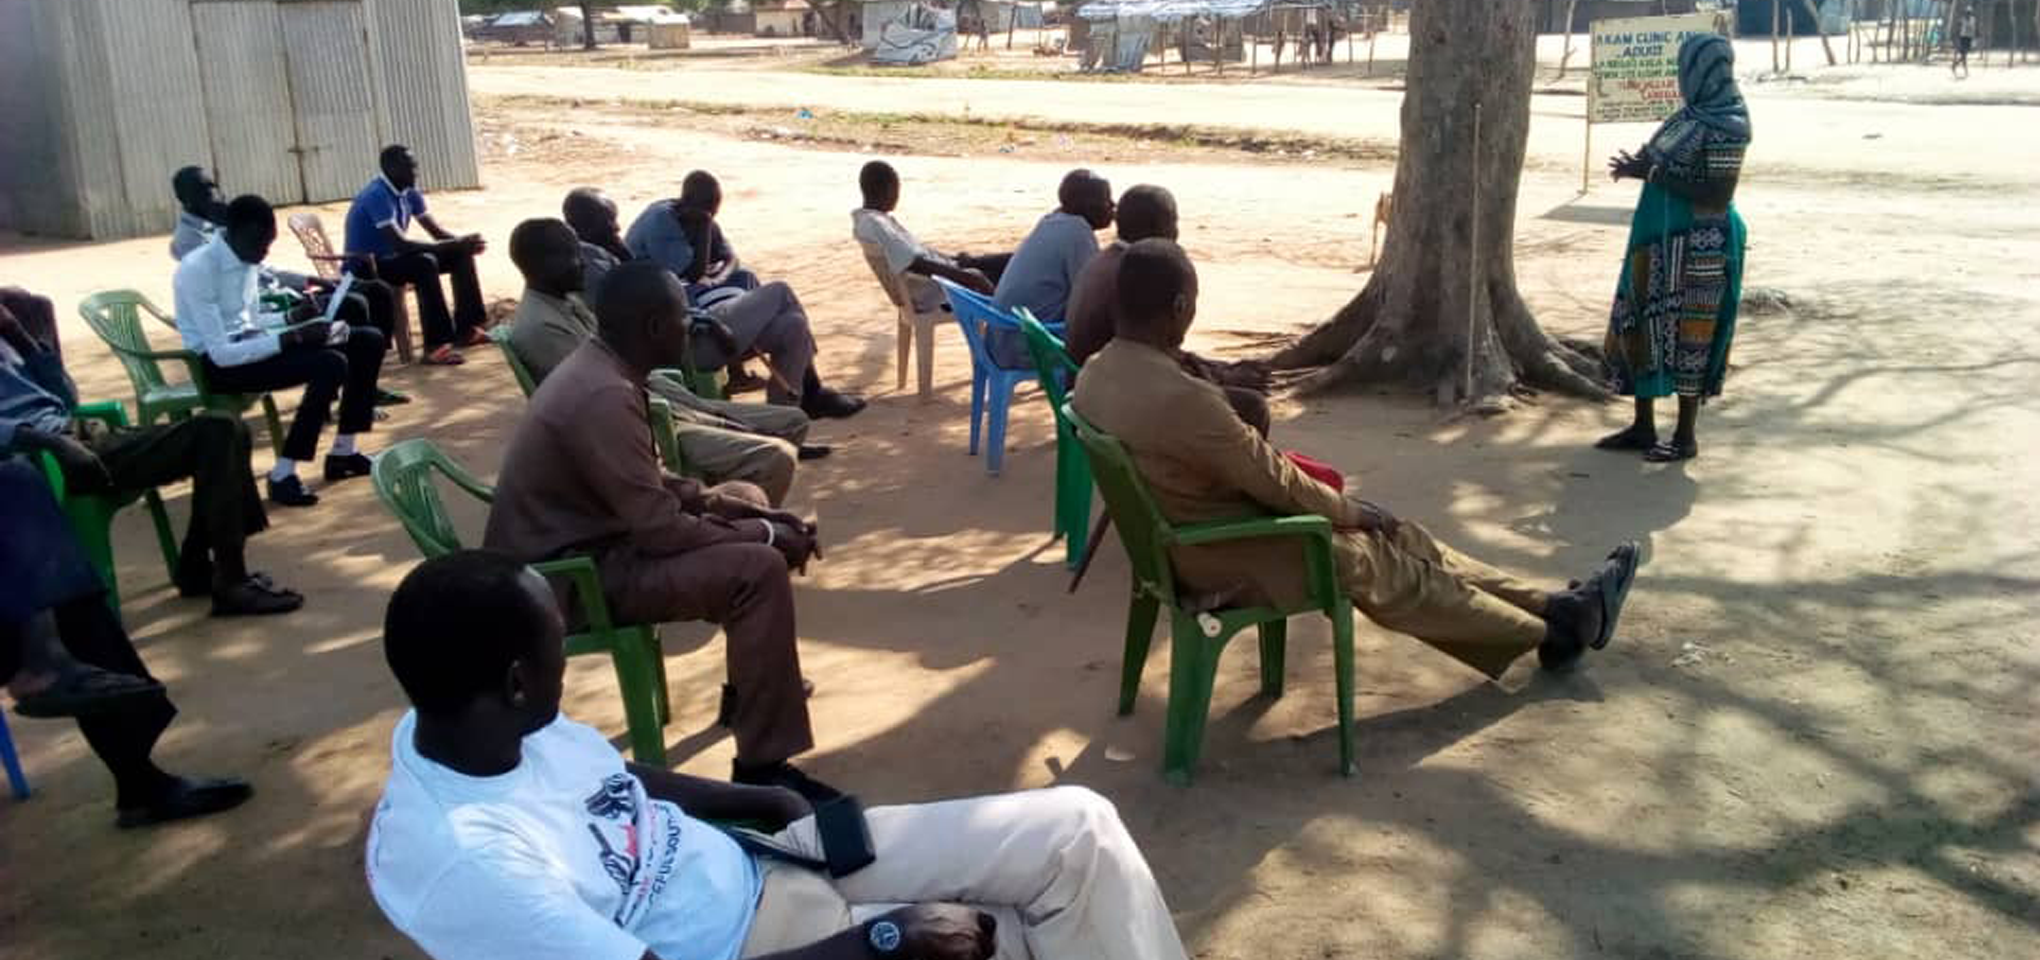 RVI researchers organize public health messaging in South Sudan